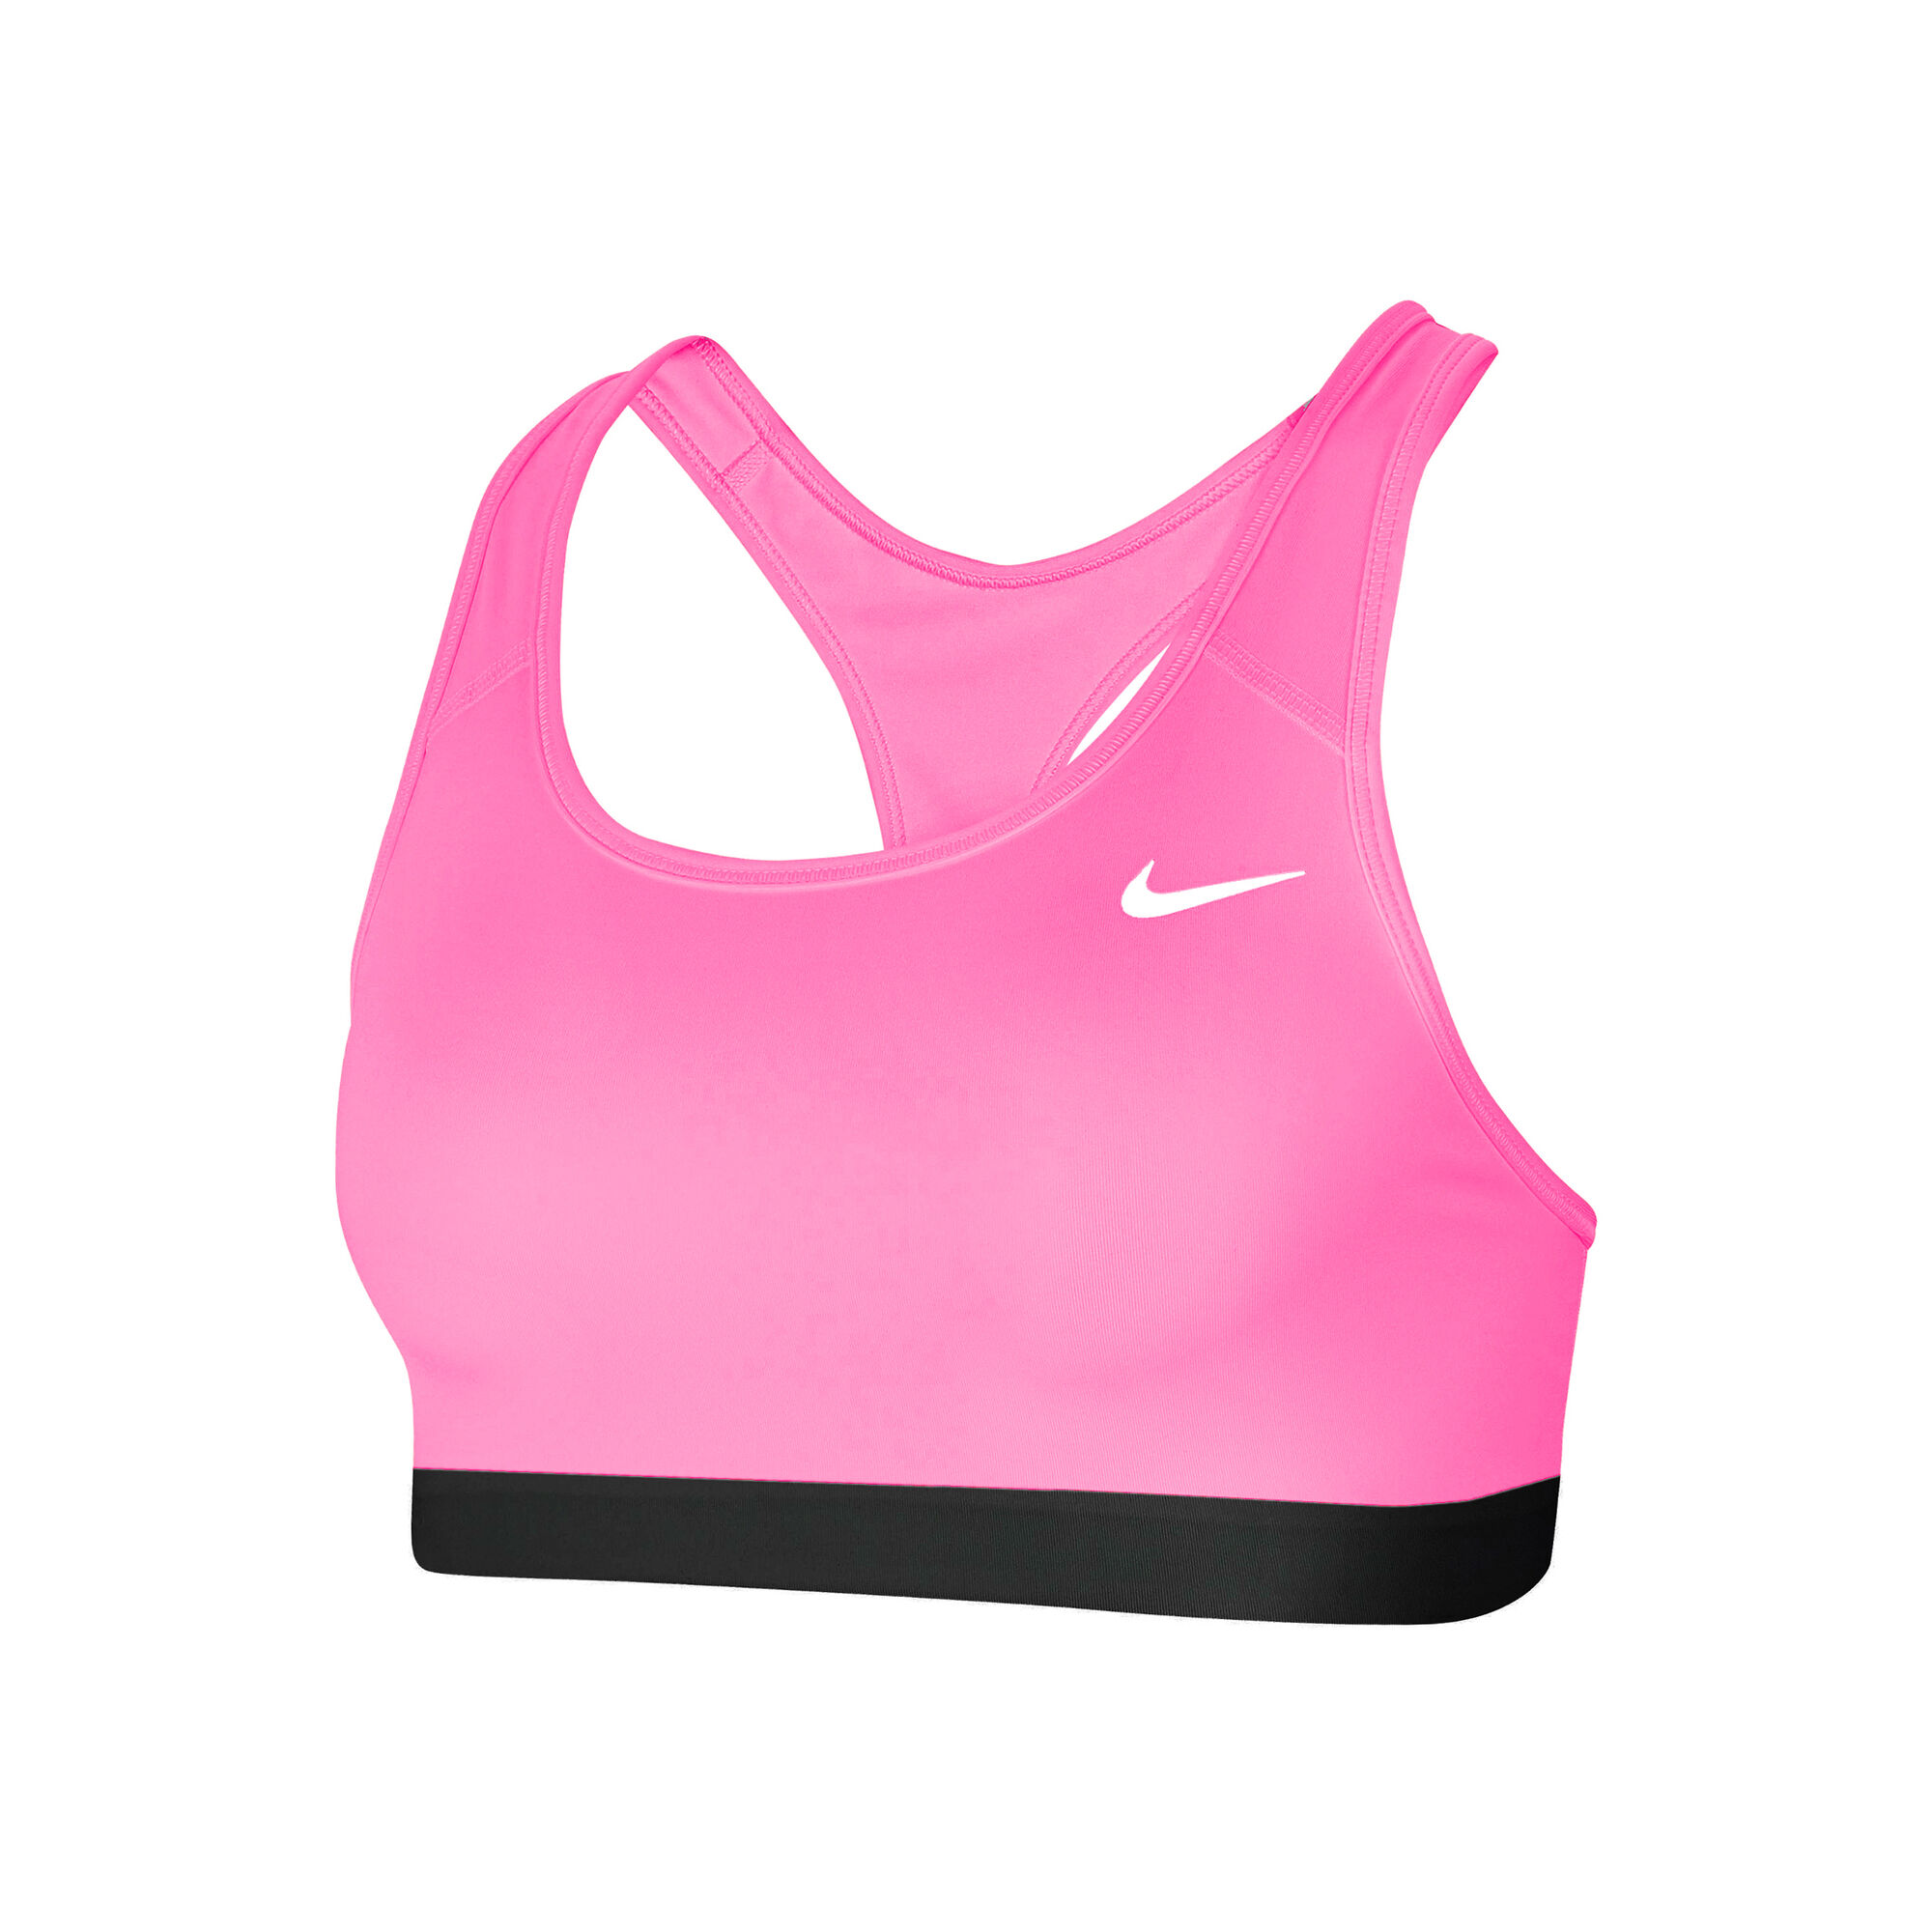 Swoosh Sports Bras Girls - Pink, Black